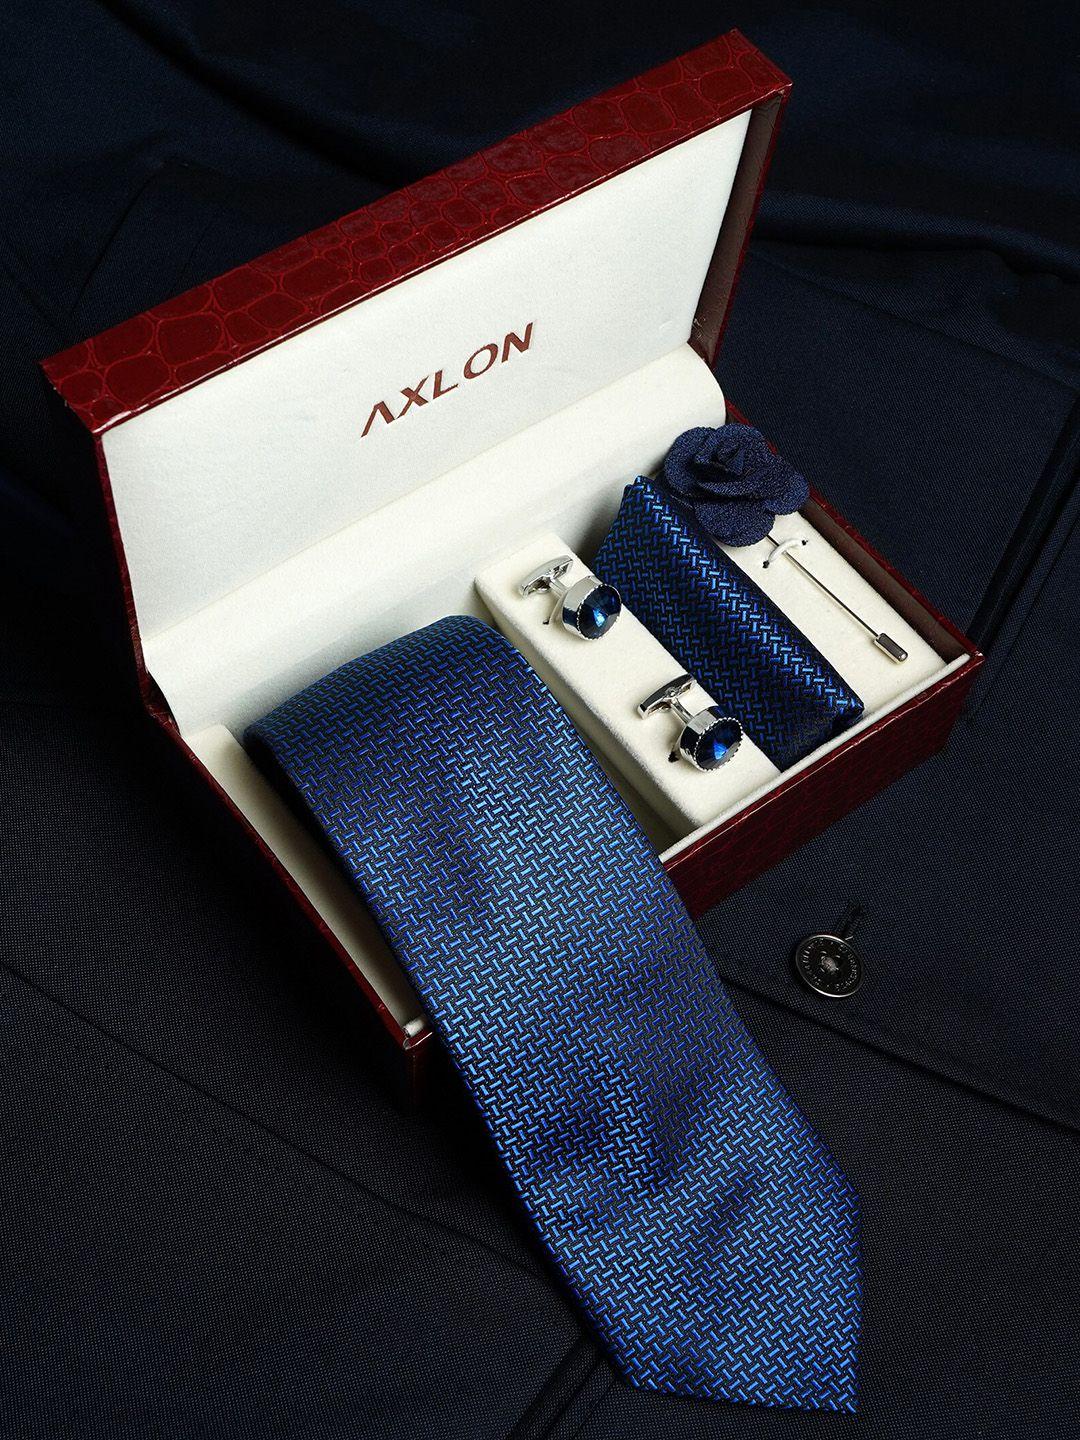 axlon men printed tie set with pocket square, cufflink & flower pin